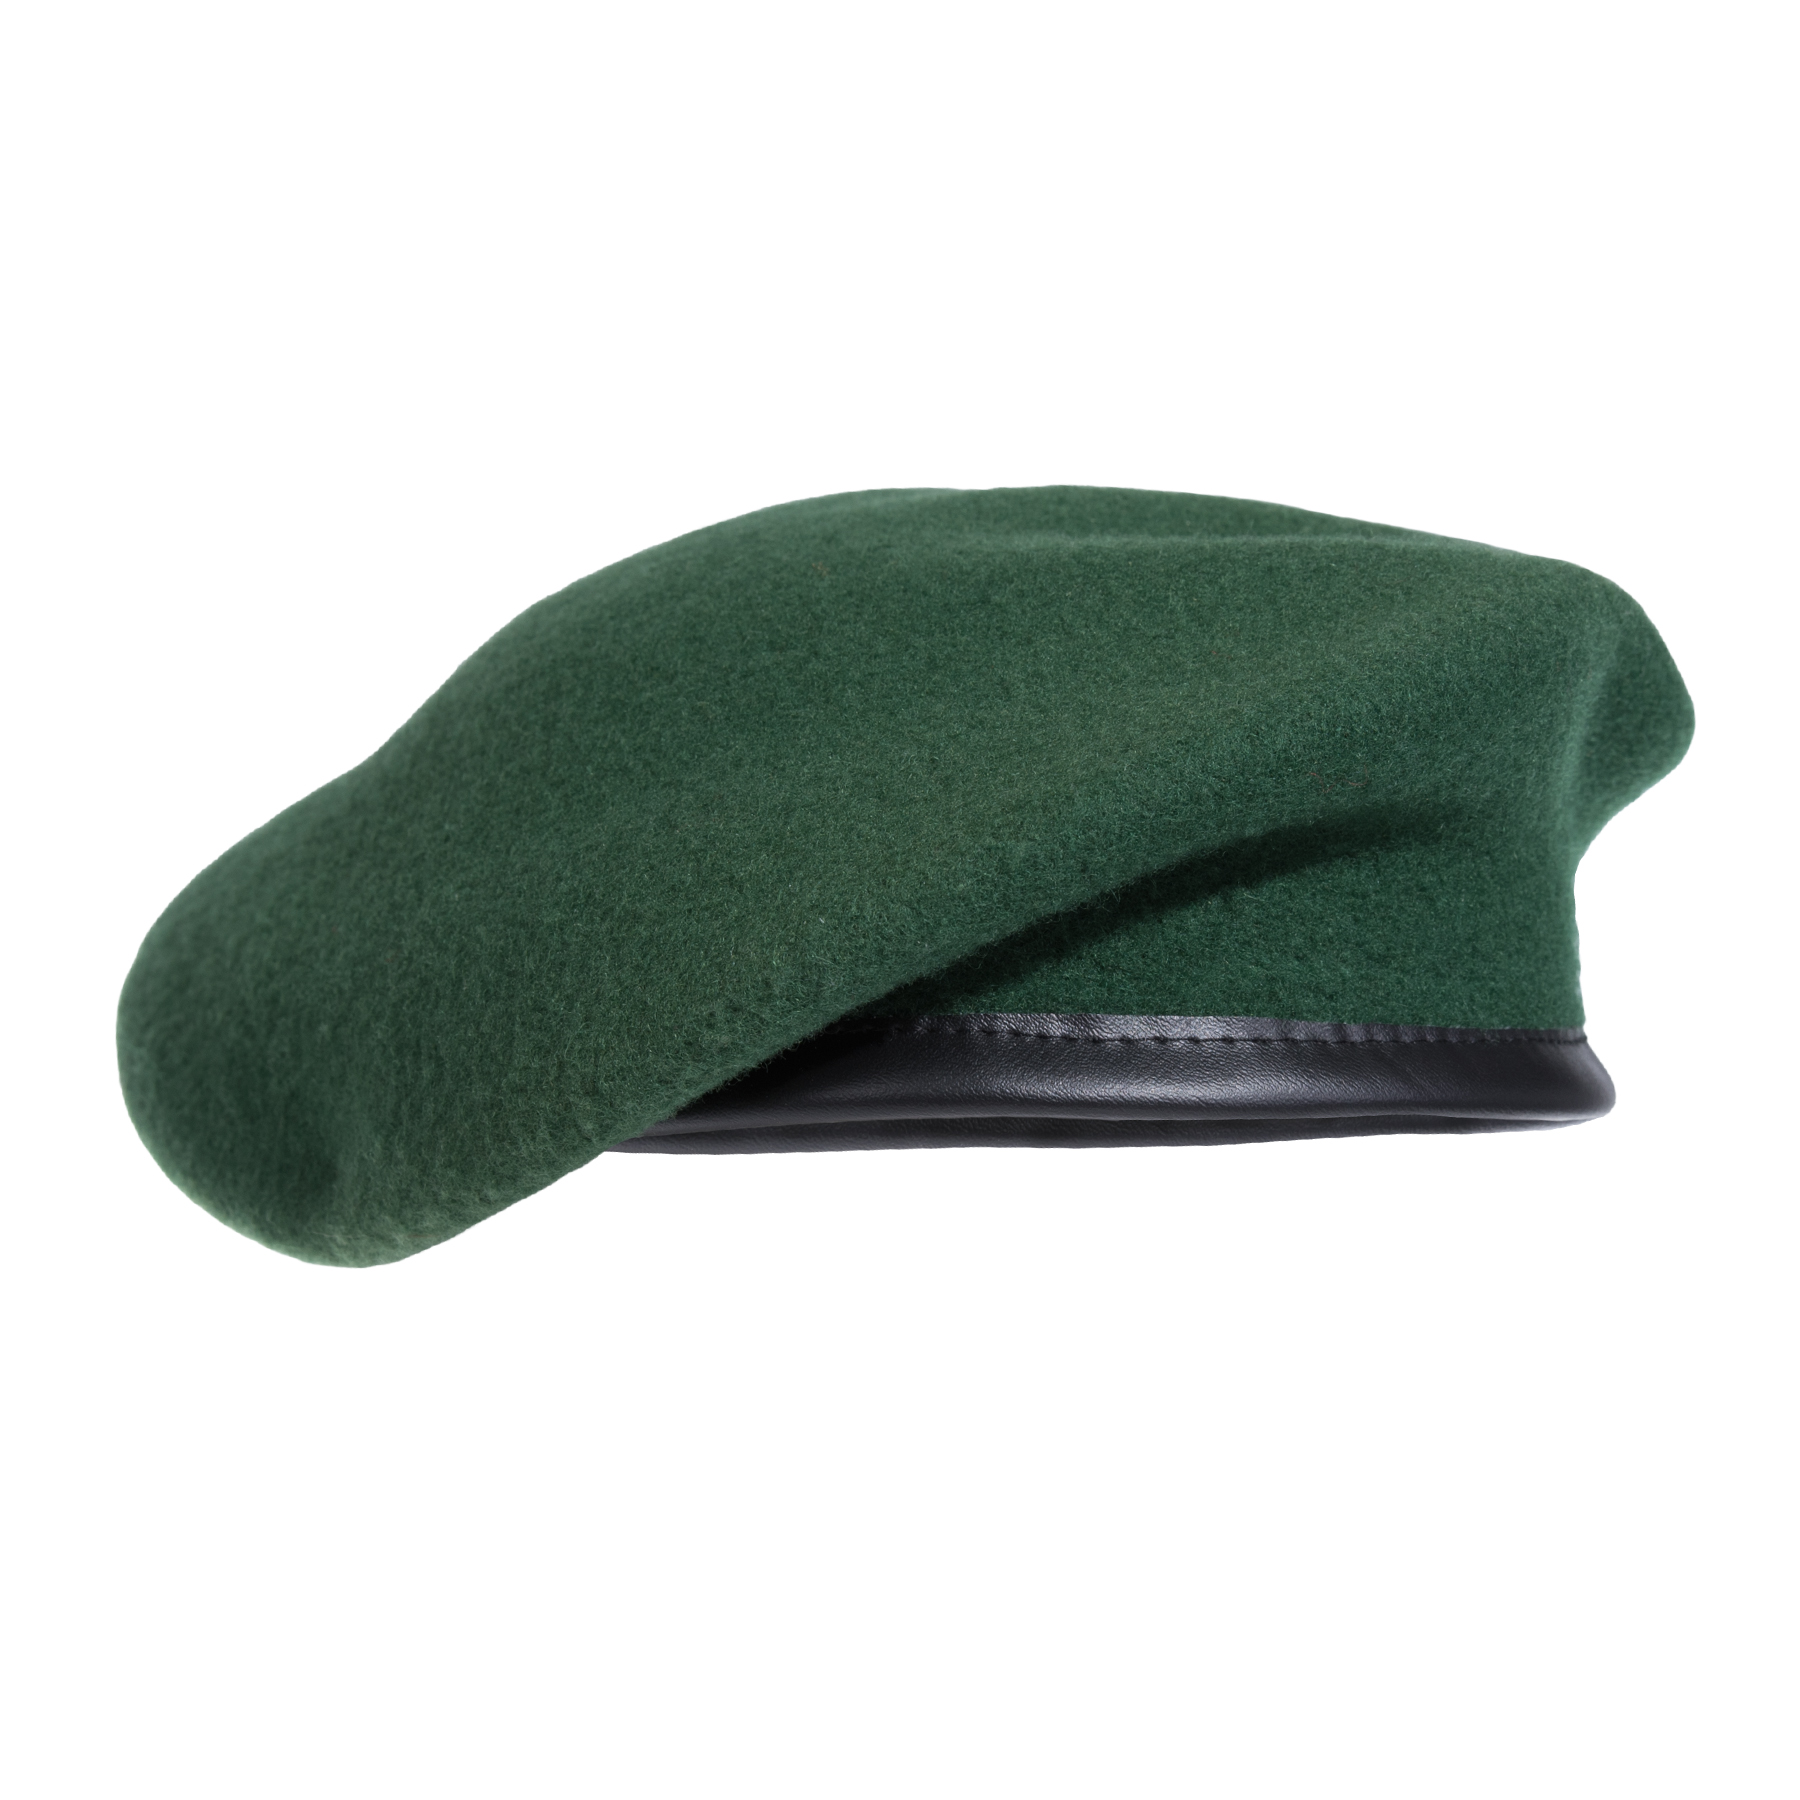 french-style-beret-dark-green-size-59-bfg-outdoor